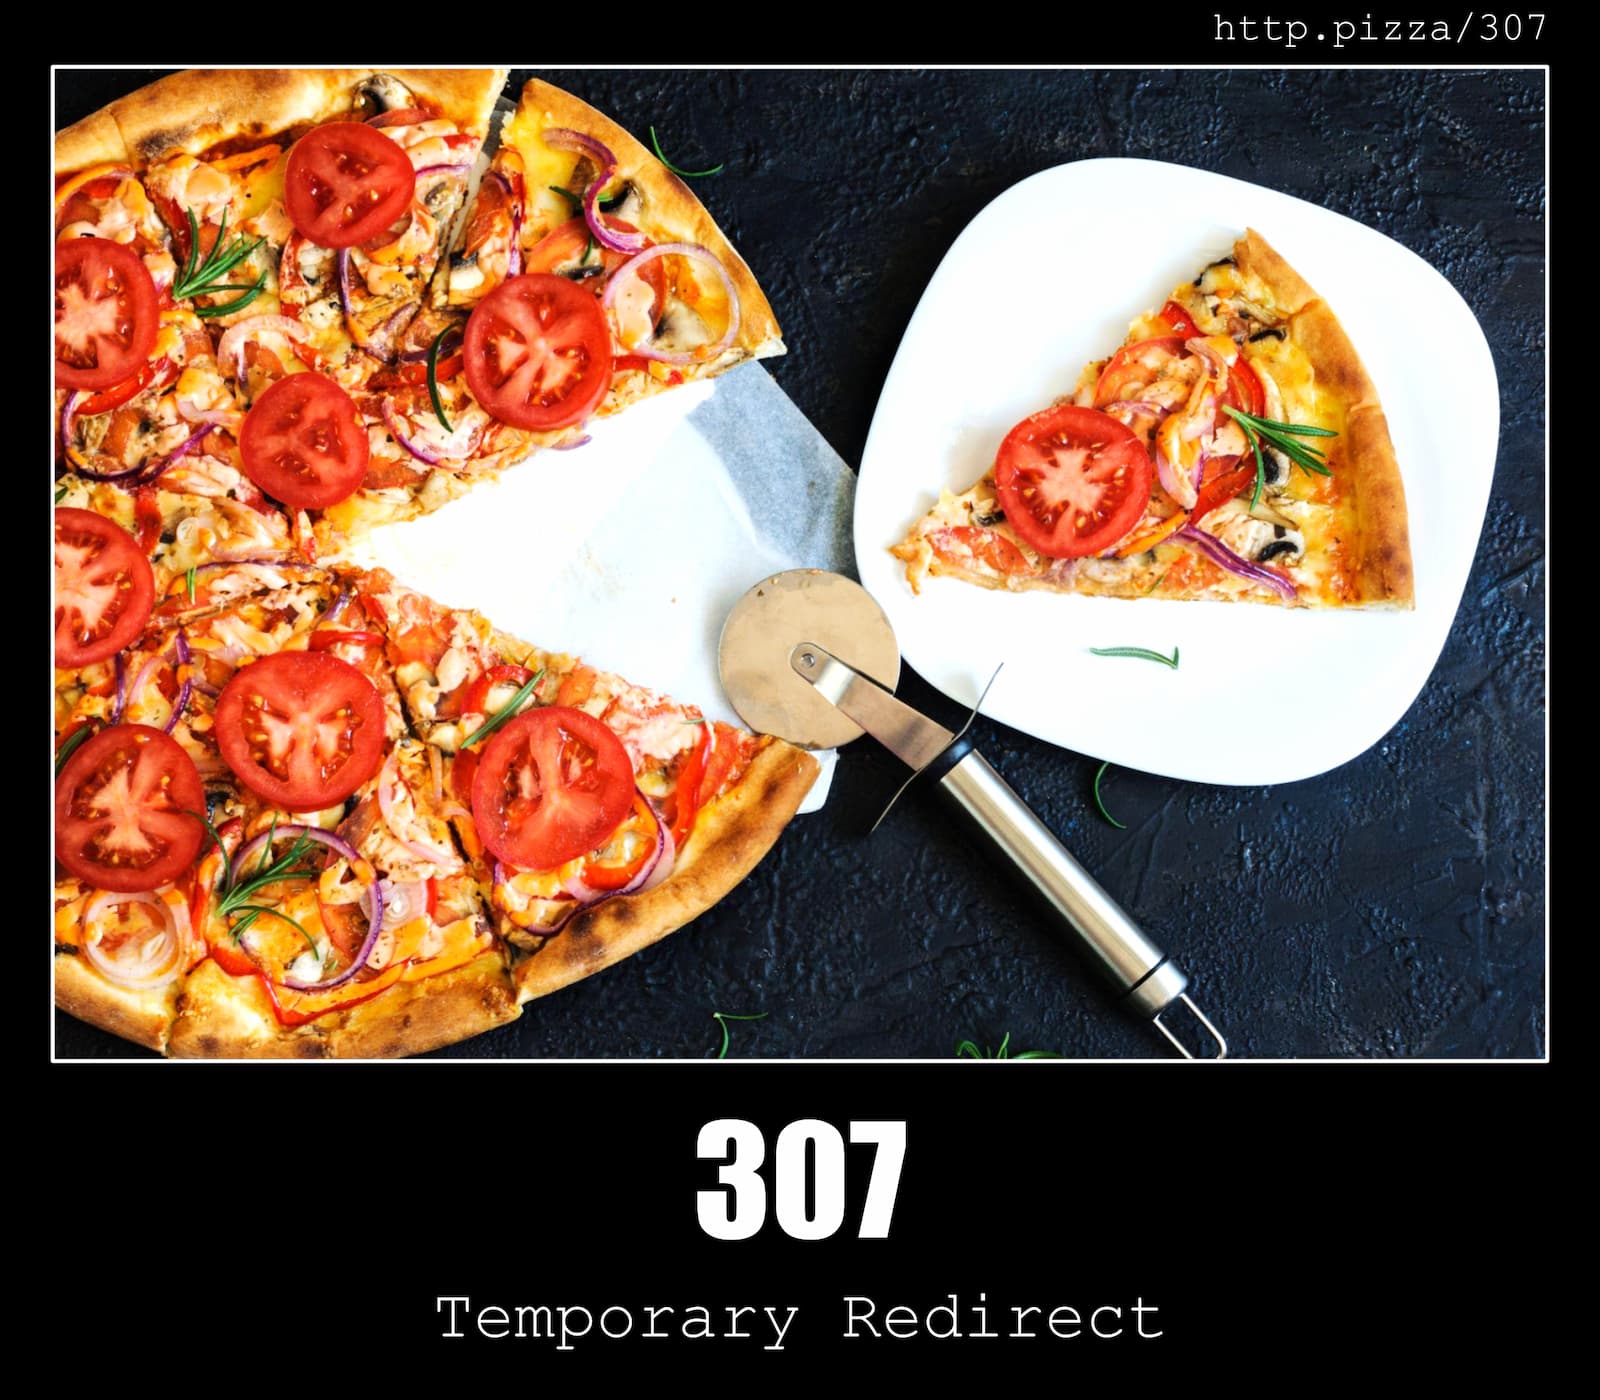 HTTP Status Code 307 Temporary Redirect & Pizzas